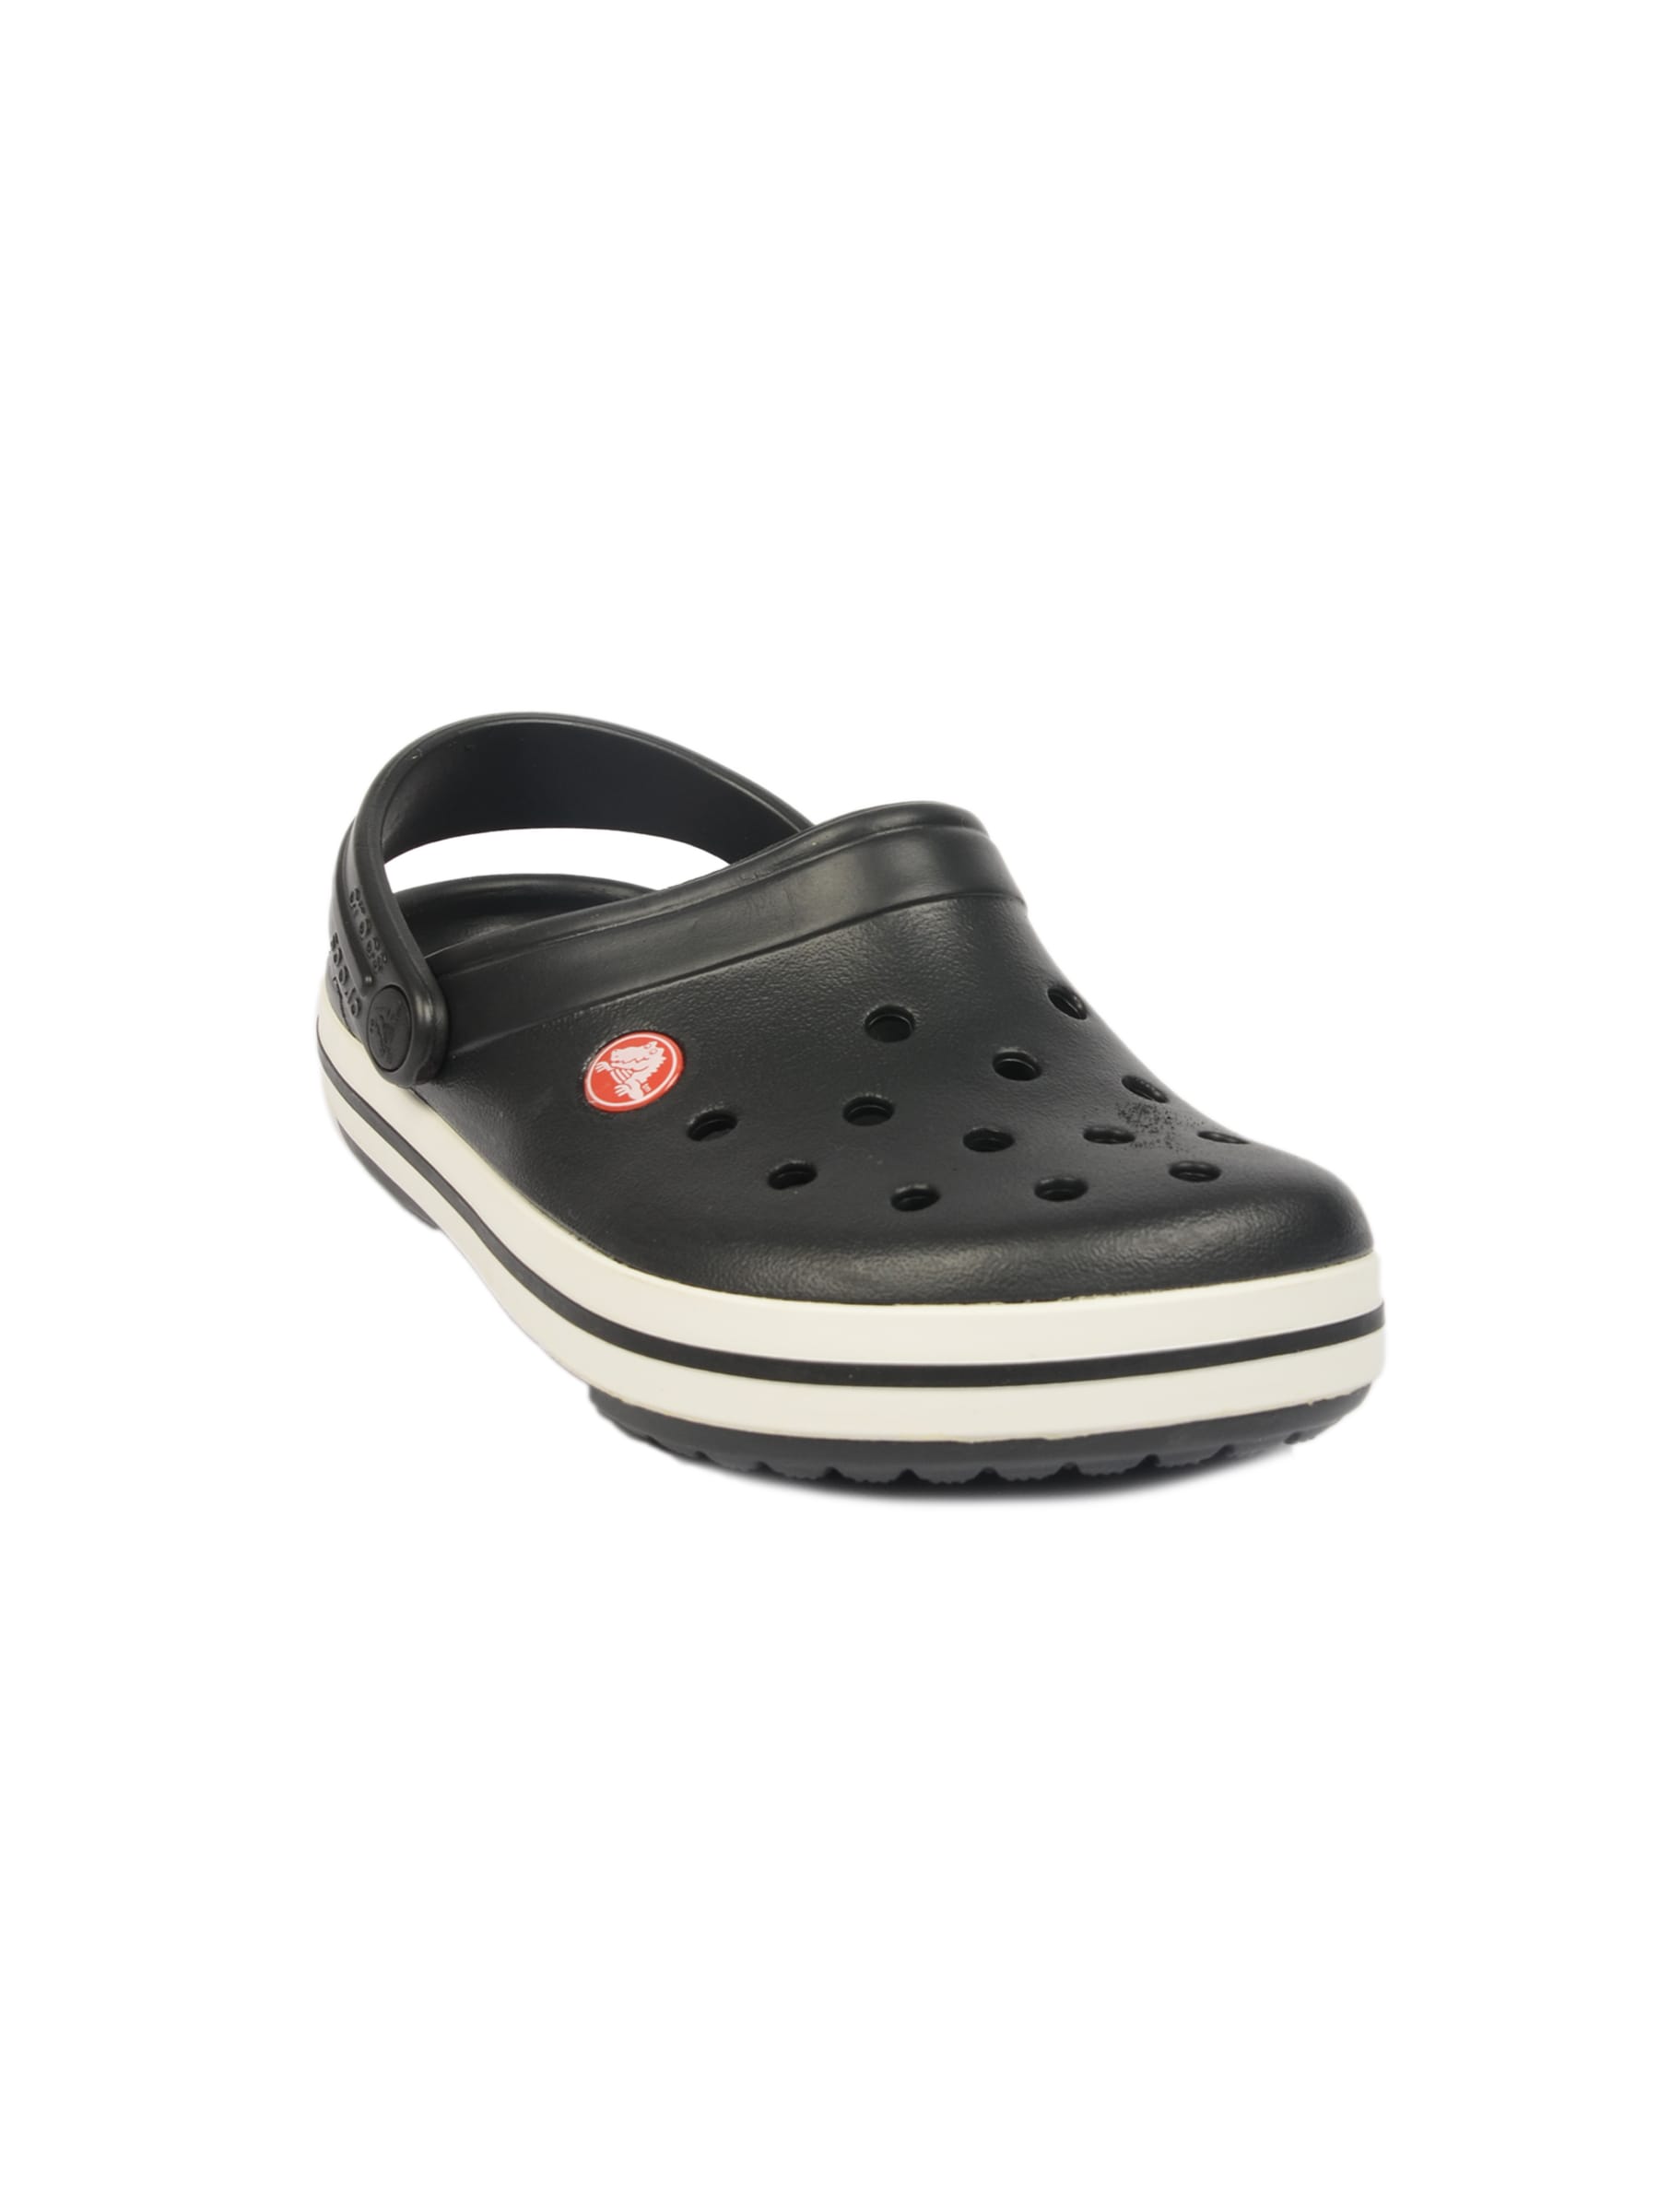 Crocs Crocband Kids Black Sandals